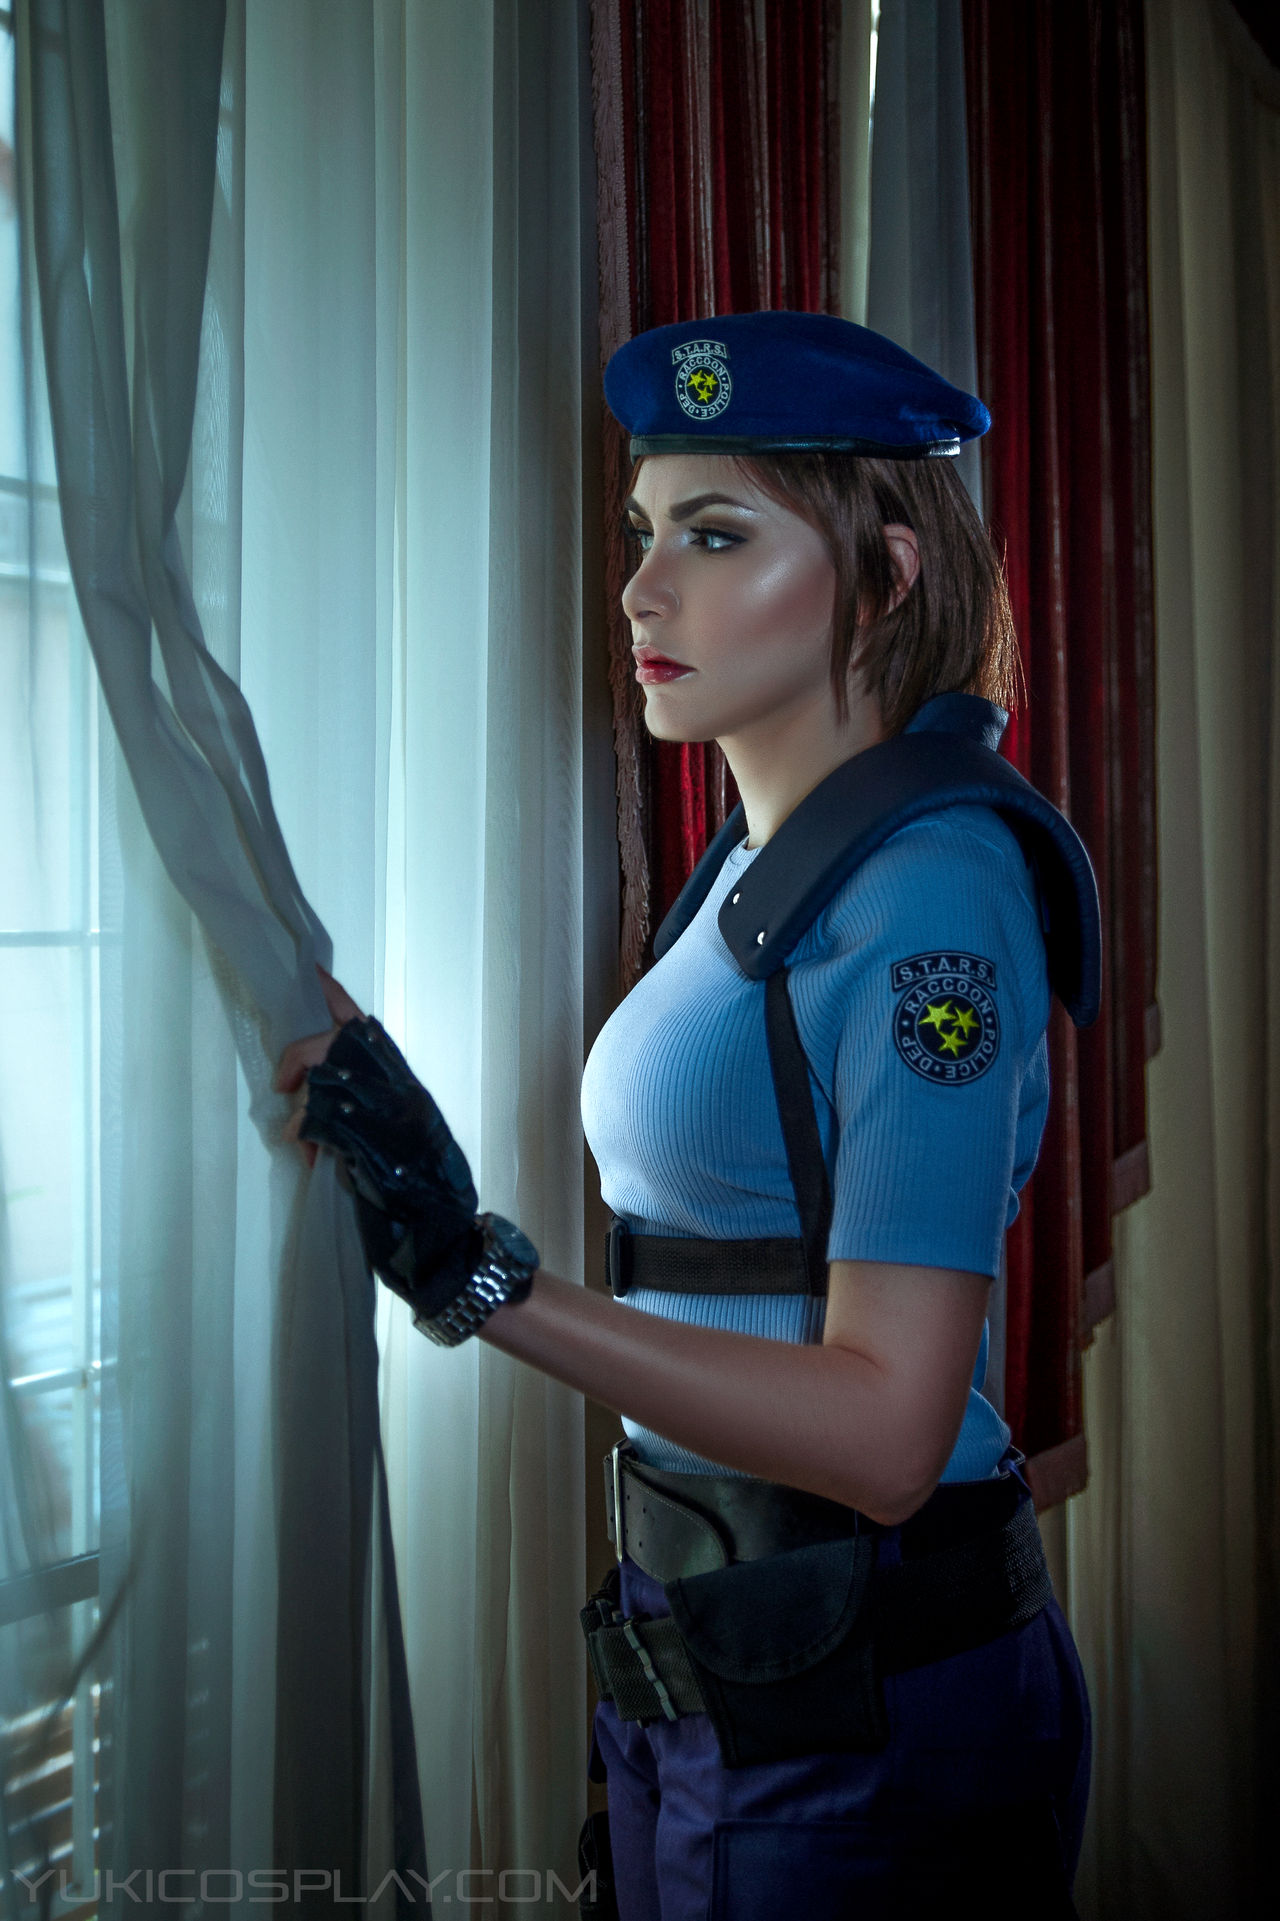 Jill Valentine Resident Evil 1